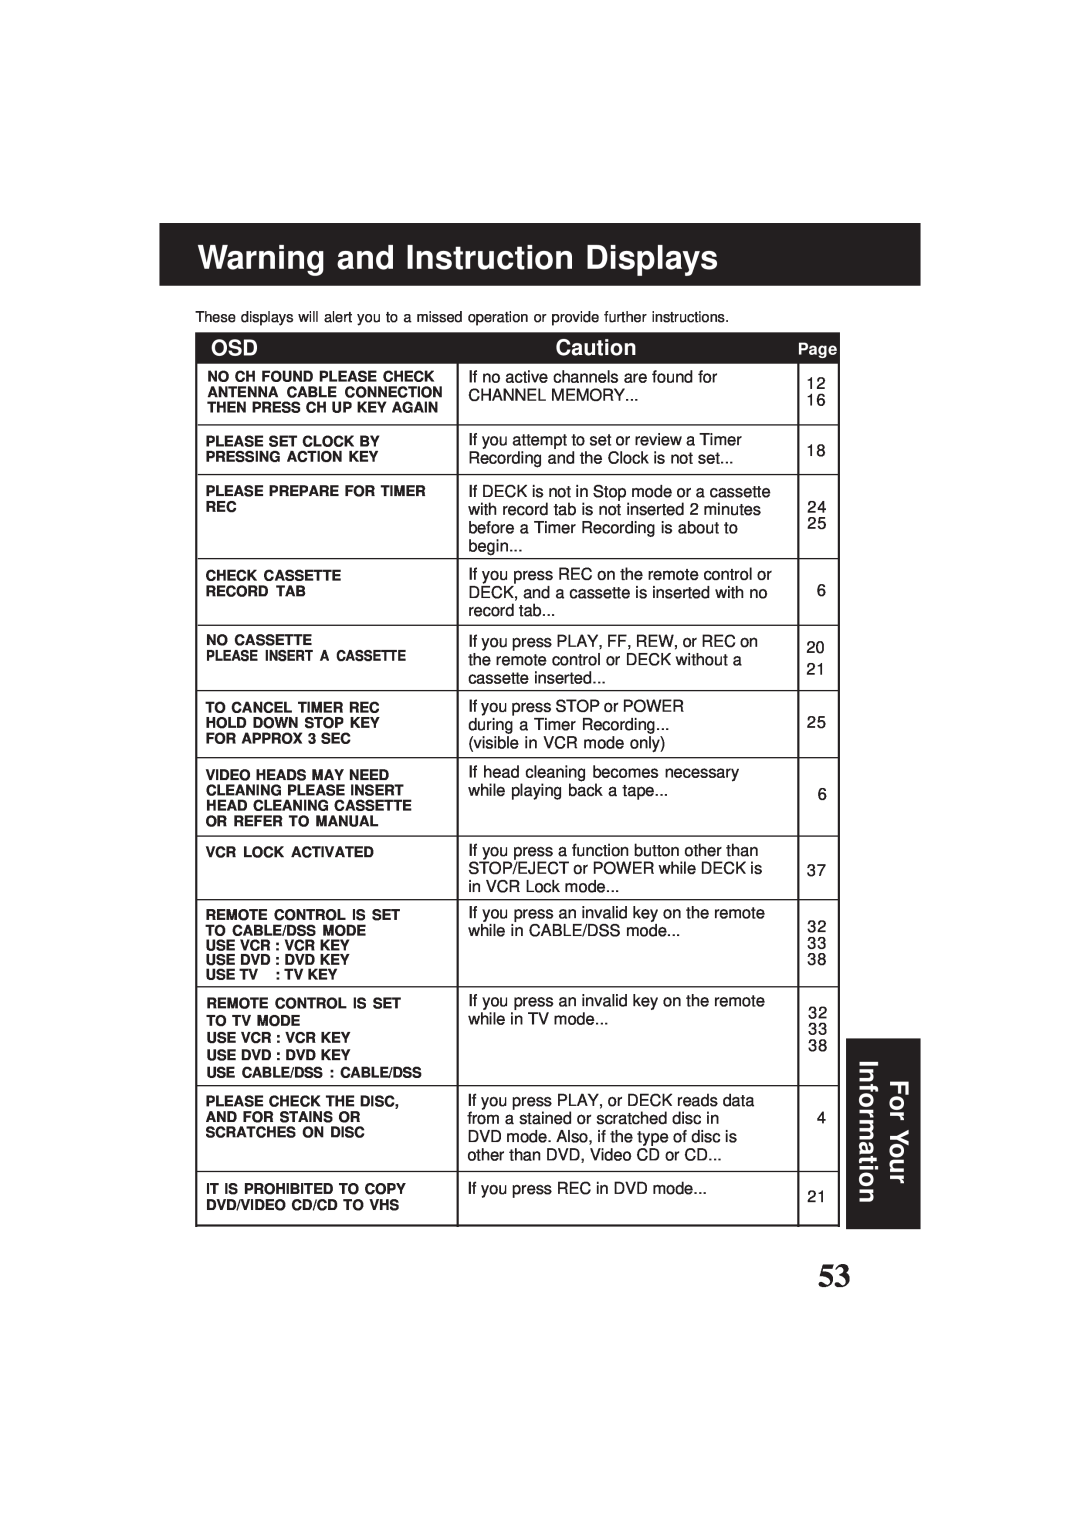 Panasonic PV-D4761 operating instructions Warning and Instruction Displays 